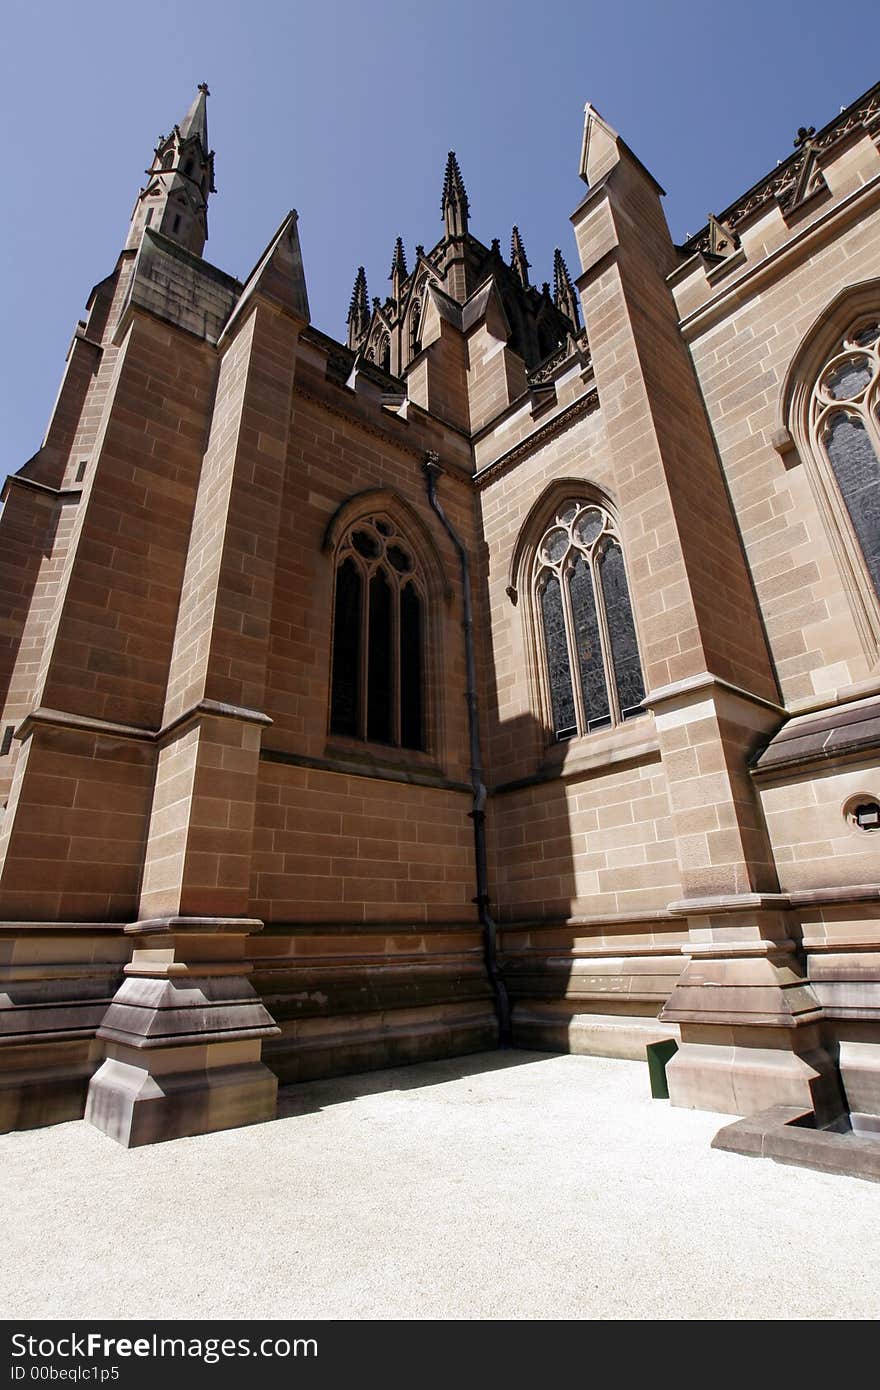 St Mary's Cathedral, Sydney, Australia - Seat of the Roman Catholic Archbishop of Sydney